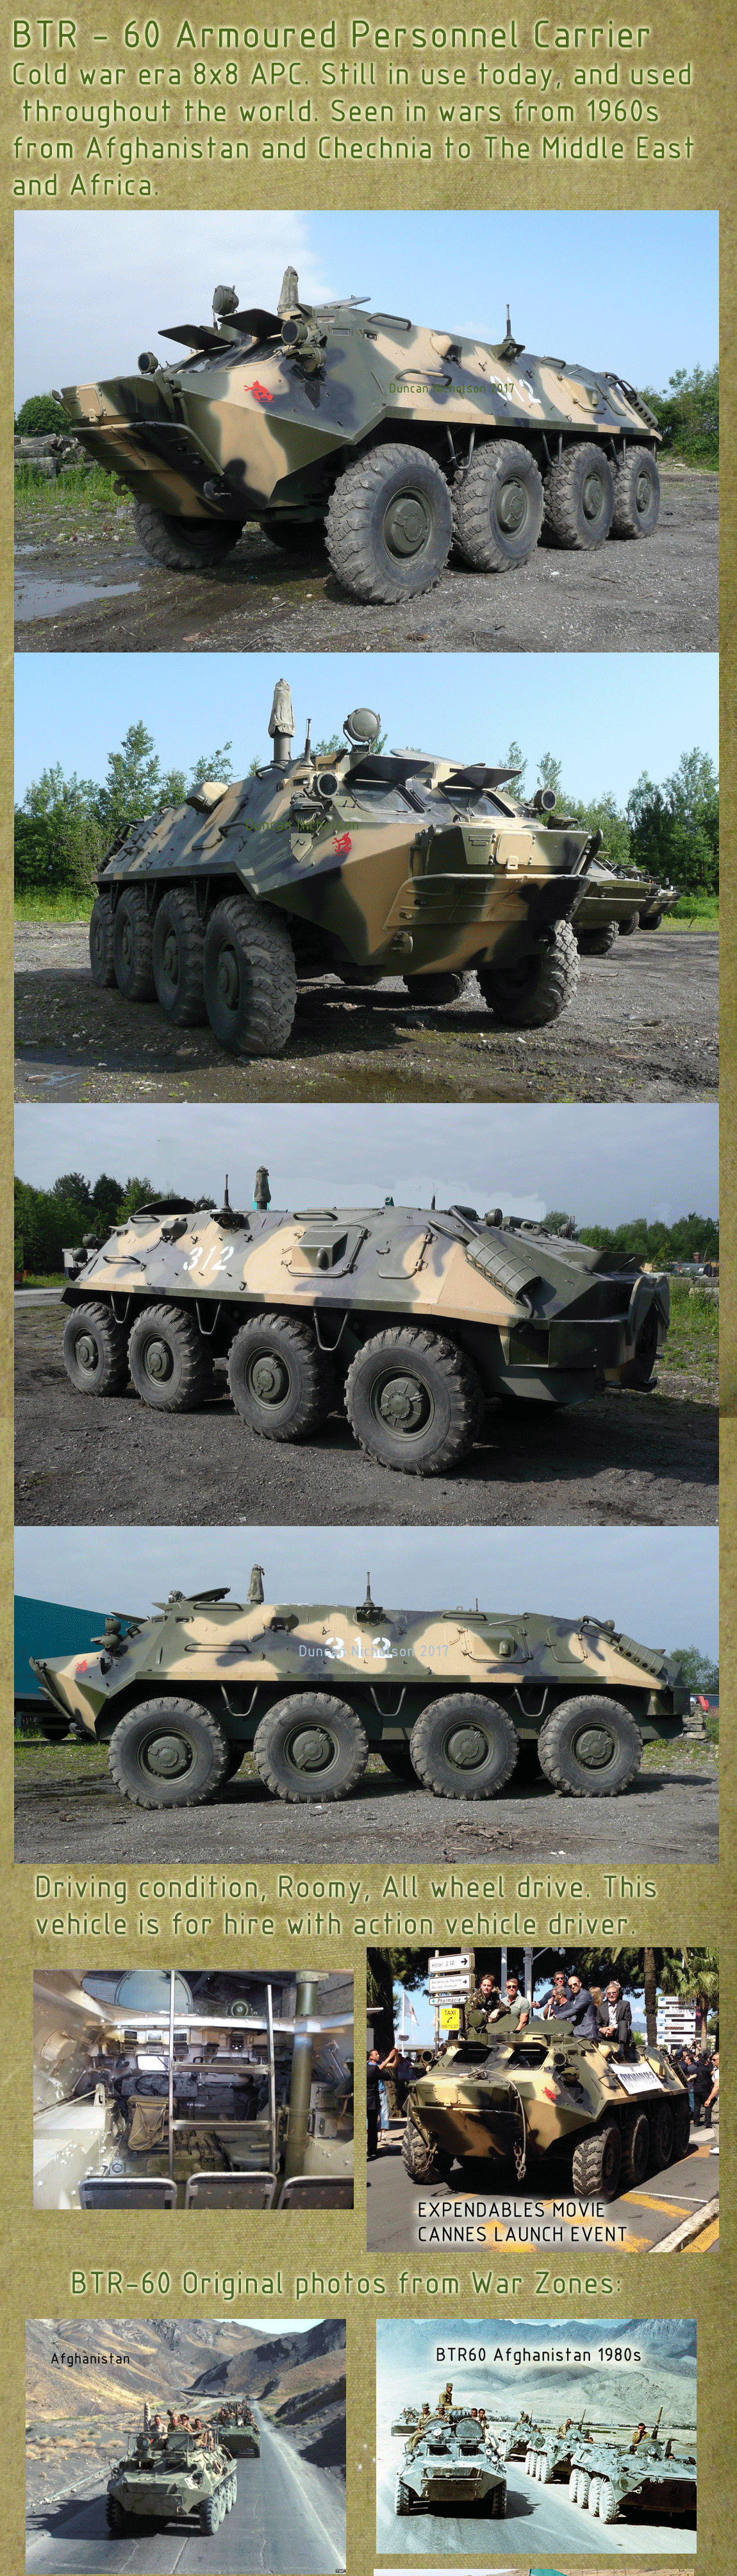 BTR60 Russian APC for Hire details